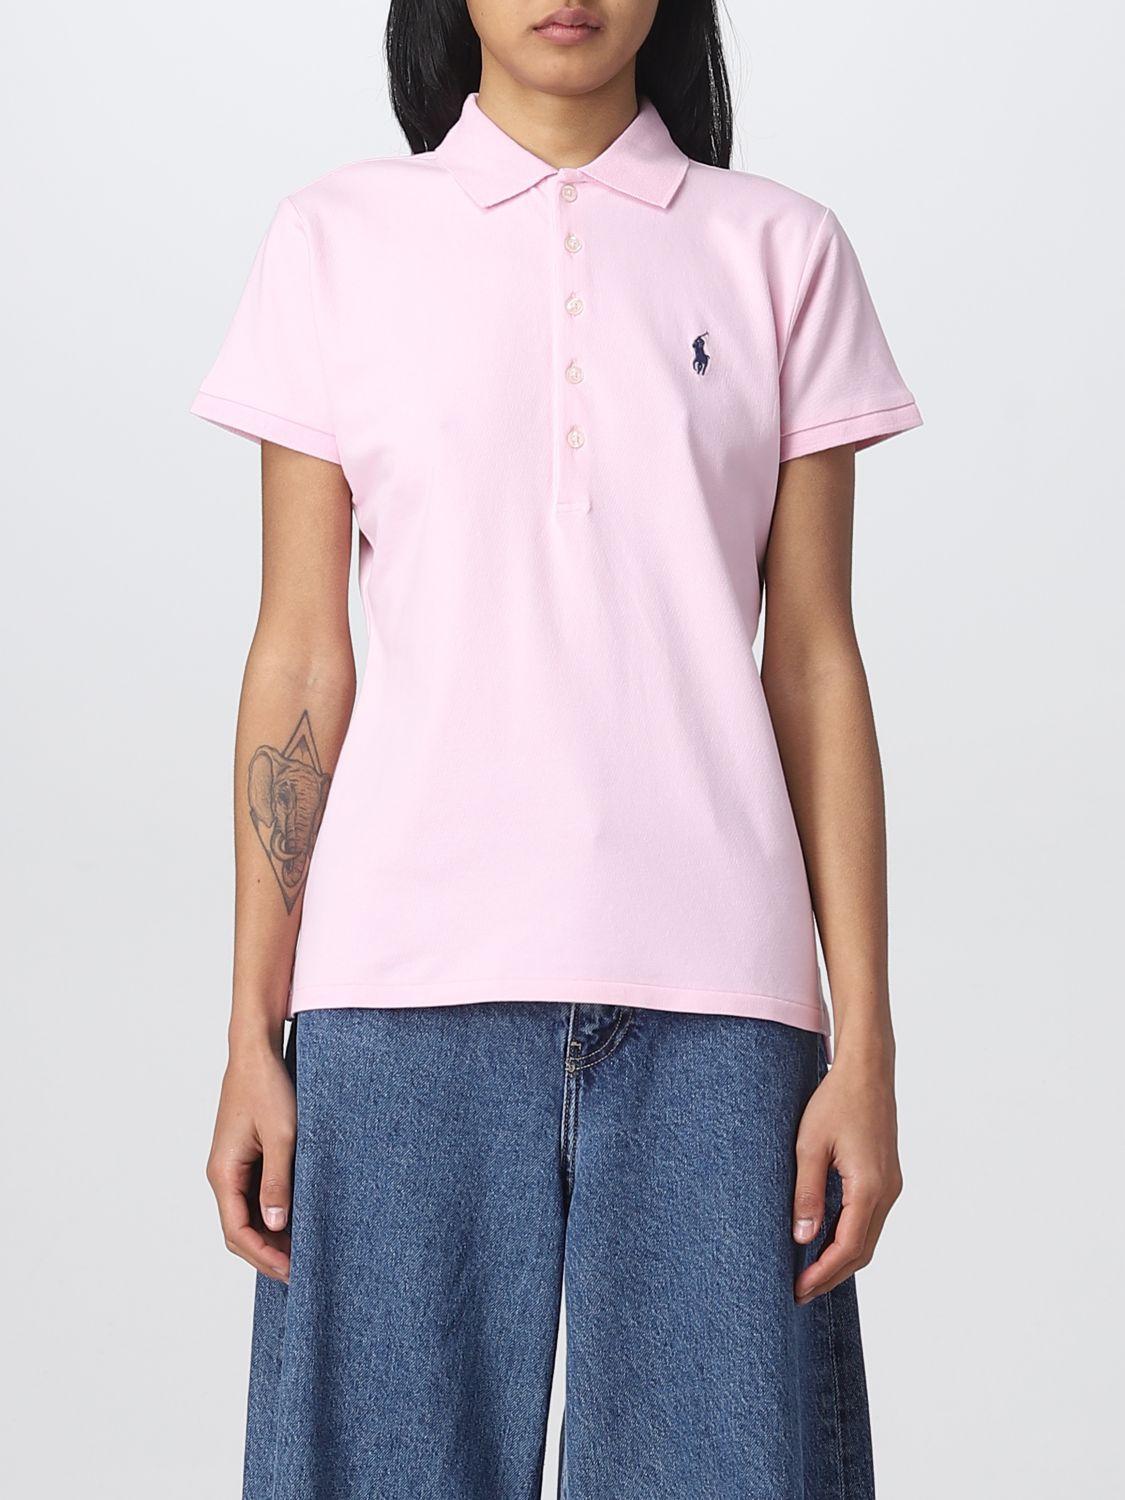 POLO RALPH LAUREN: polo shirt for woman - Blush Pink | Polo Ralph Lauren  polo shirt 211870245 online on 